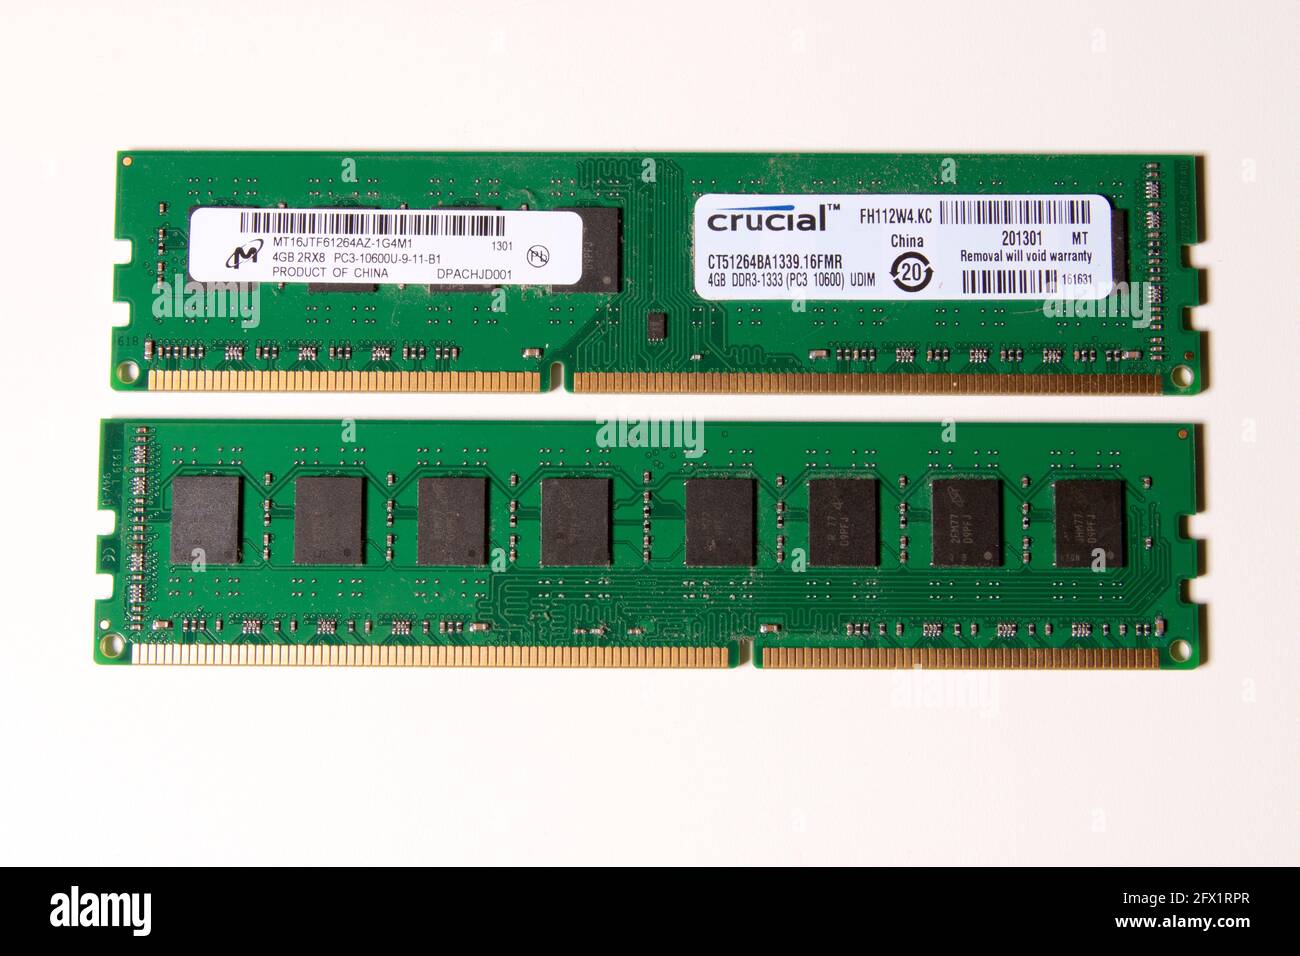 Crucial 4GB Memory Modules Stock Photo